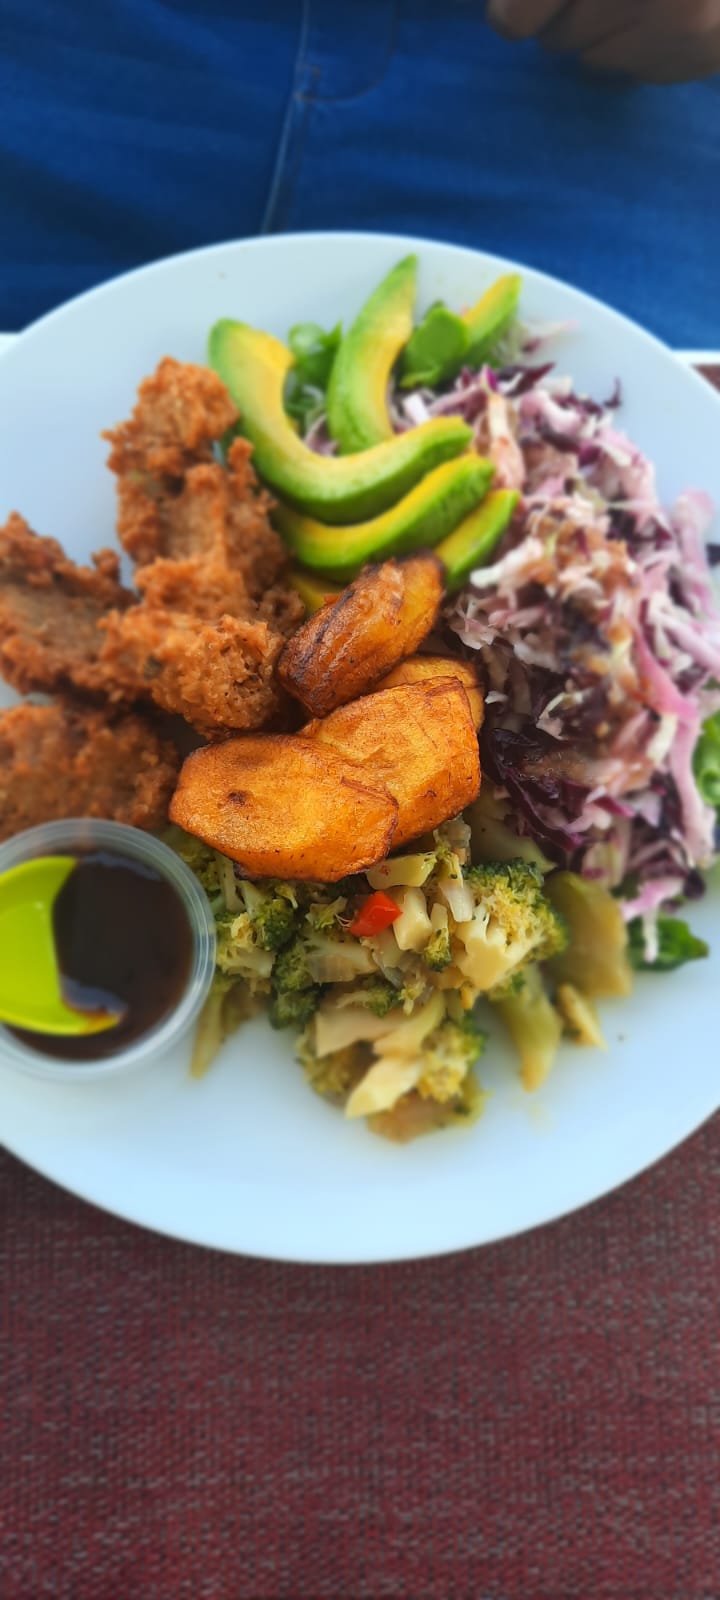 Vegan friendly meal at Irie Gardens at Walter Plantz Square Sint Maarten